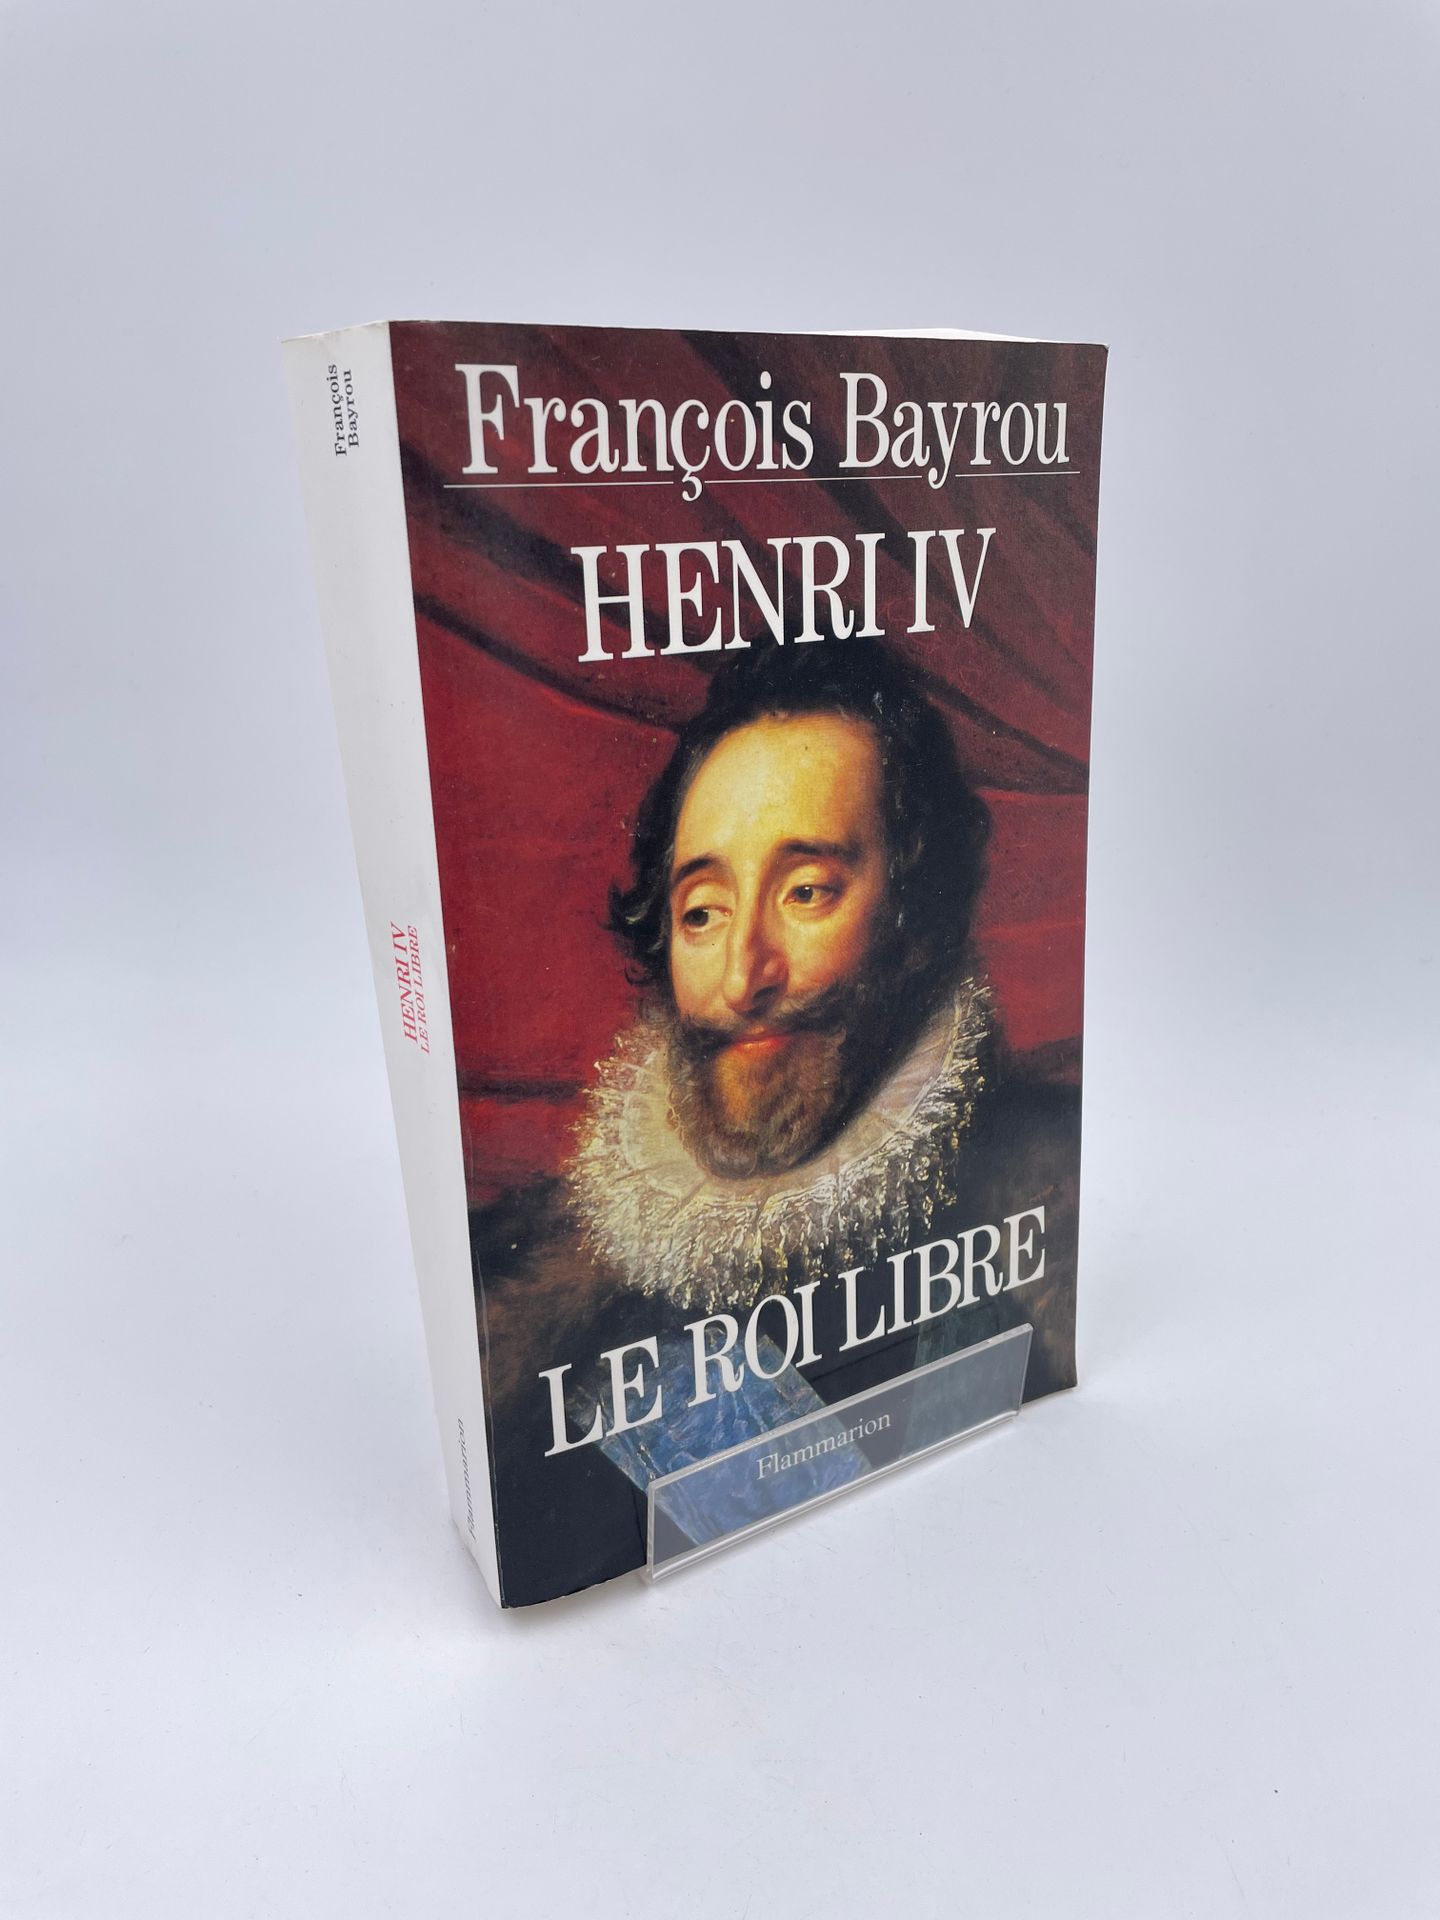 Null 1 Volume : "HENRI IV, LE ROI LIBRE", François Bayrou, Ed. Flammarion, 1994